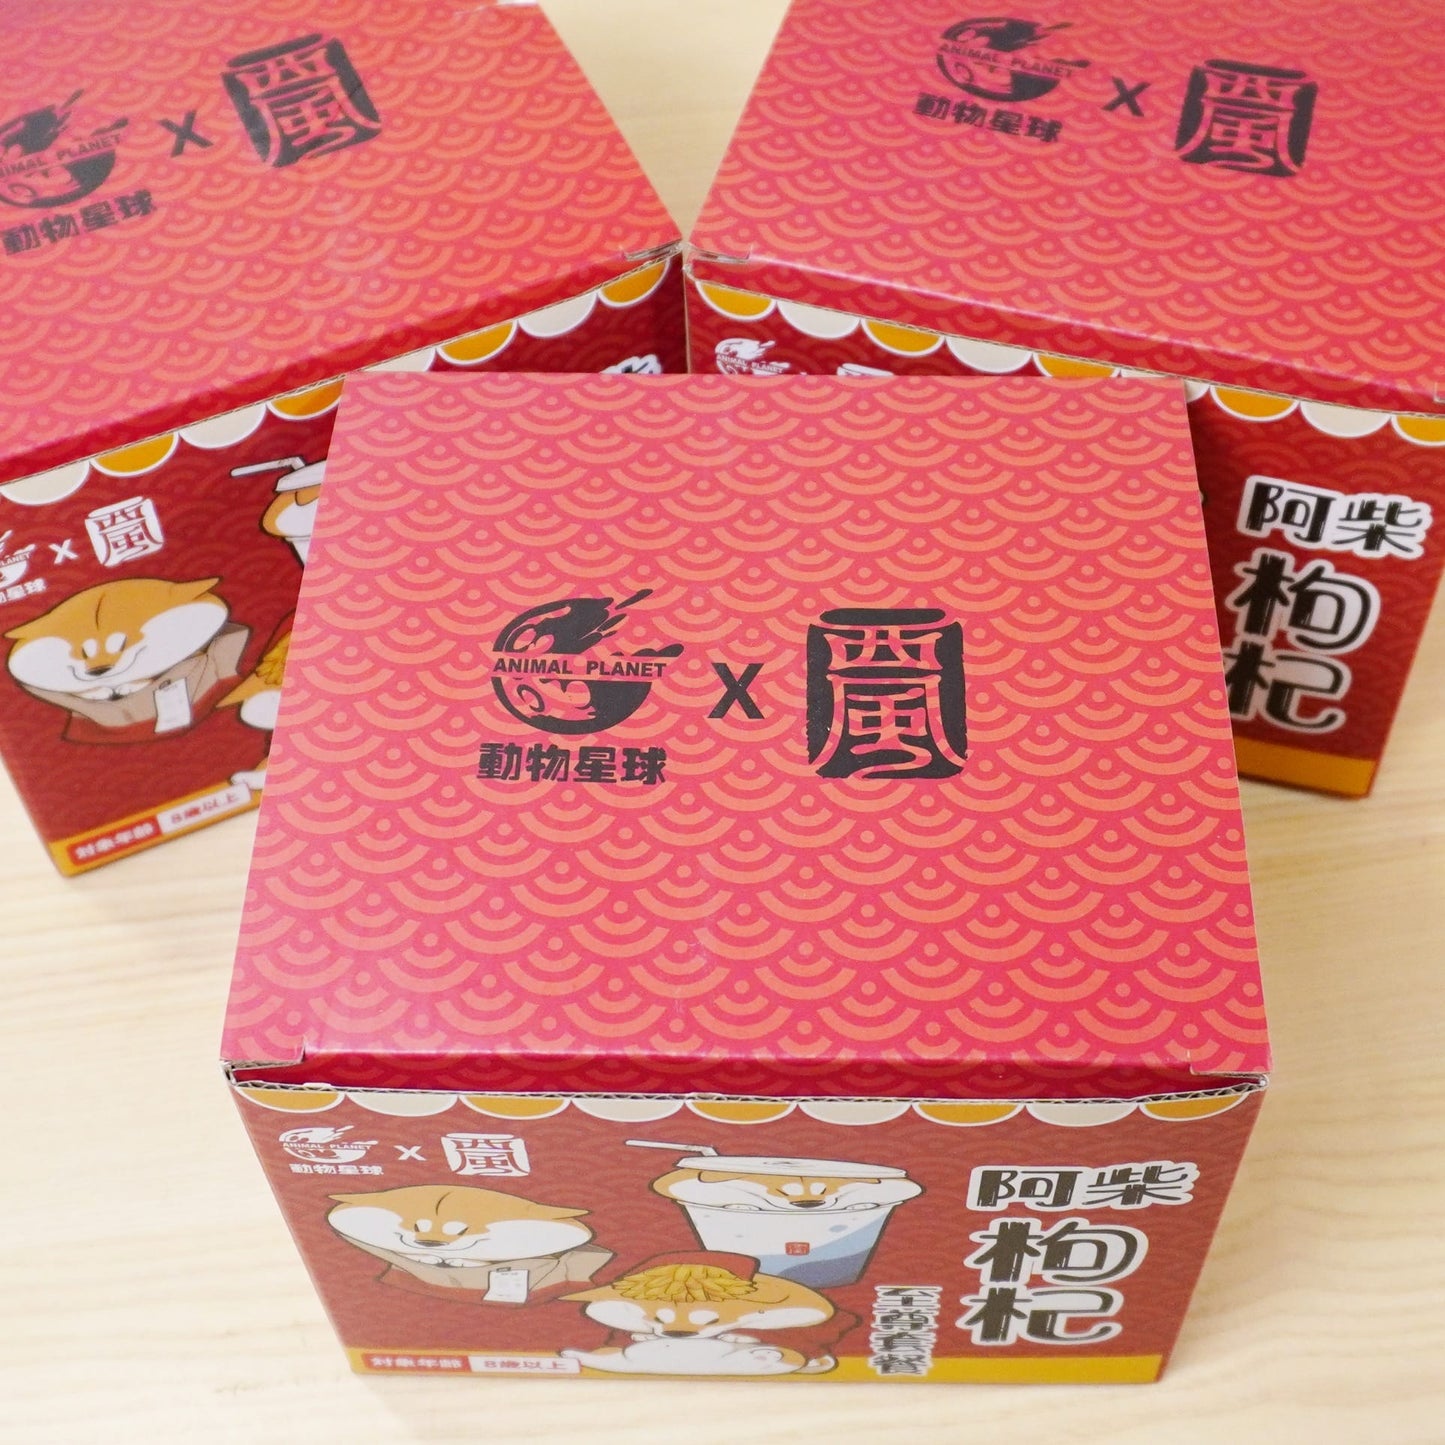 Animal Planet - Shiba Inu Fast Food Series - COKE